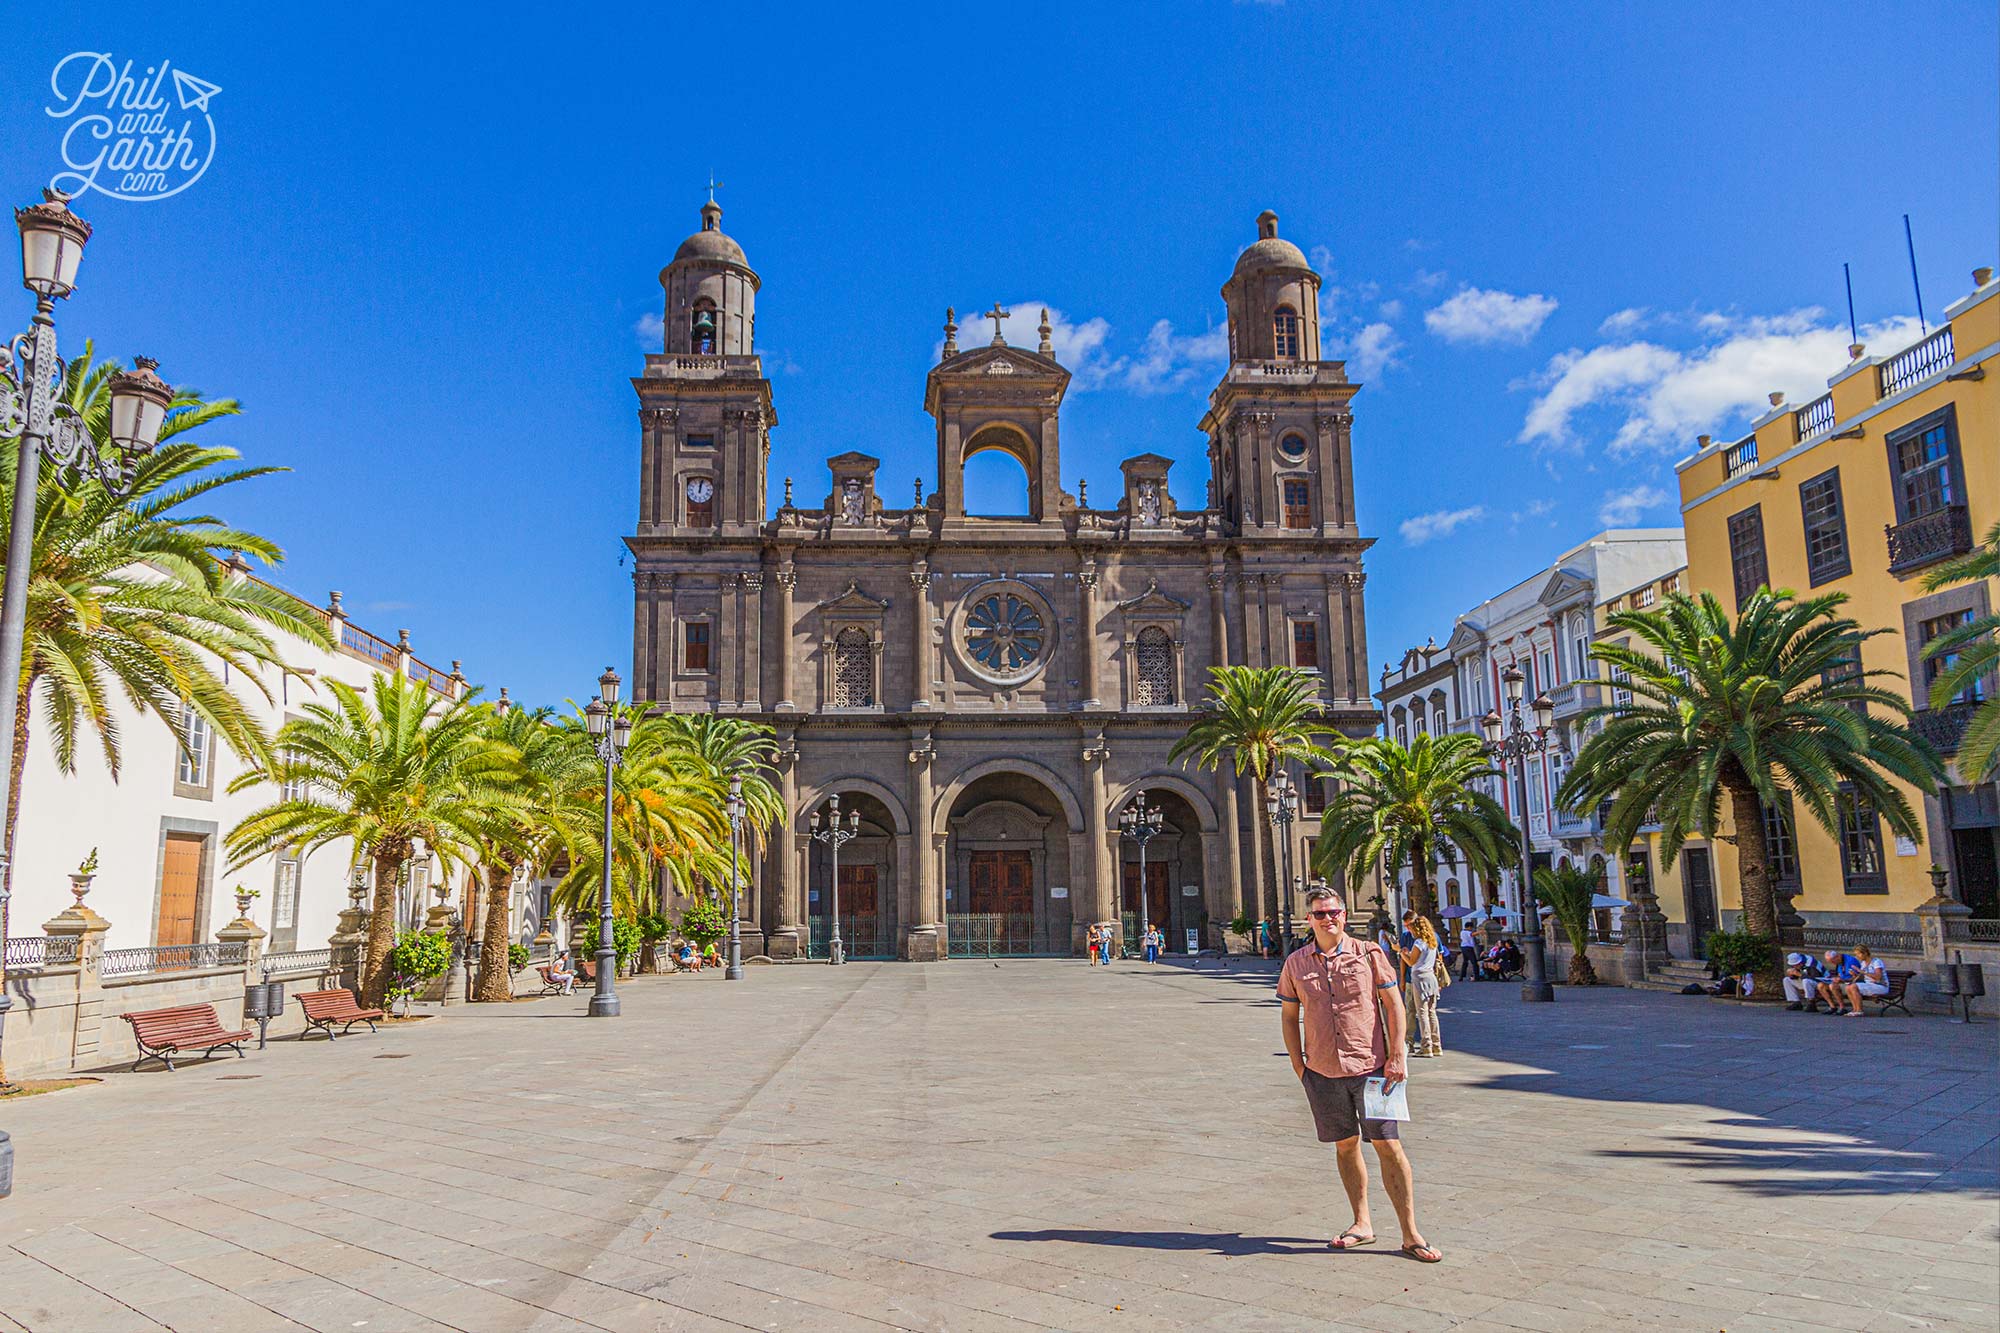 Phil outside Santa Ana Cathedral in Las Palmas